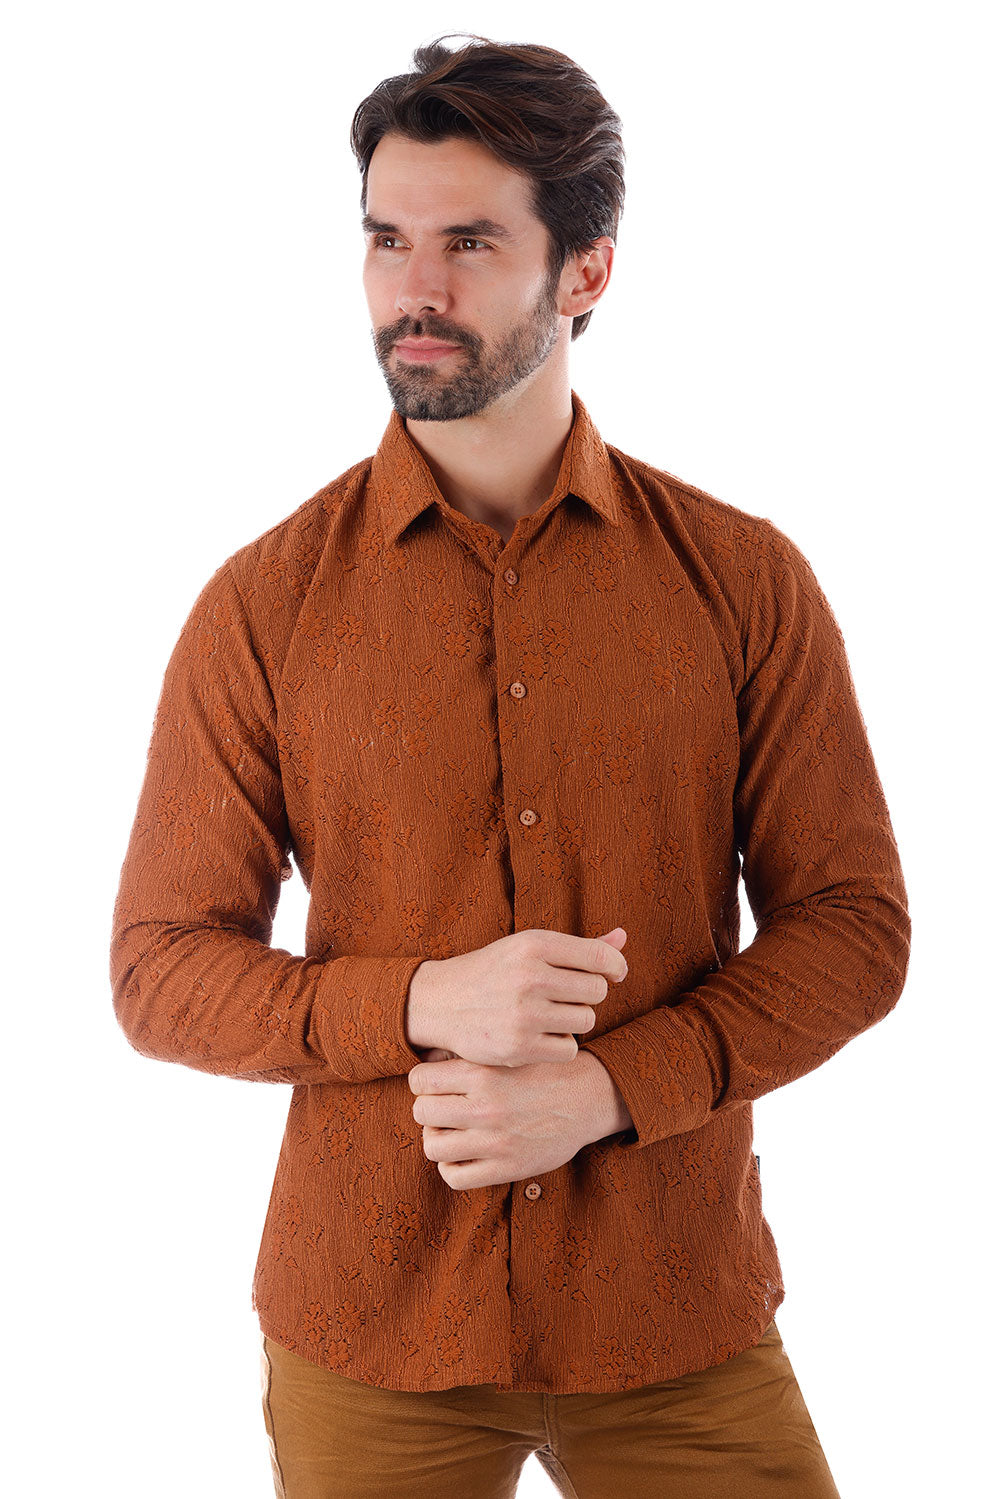 BARABAS Men's Lace See Through Stretch Sheer Long Sleeve Shirts 3B25 Nutshell